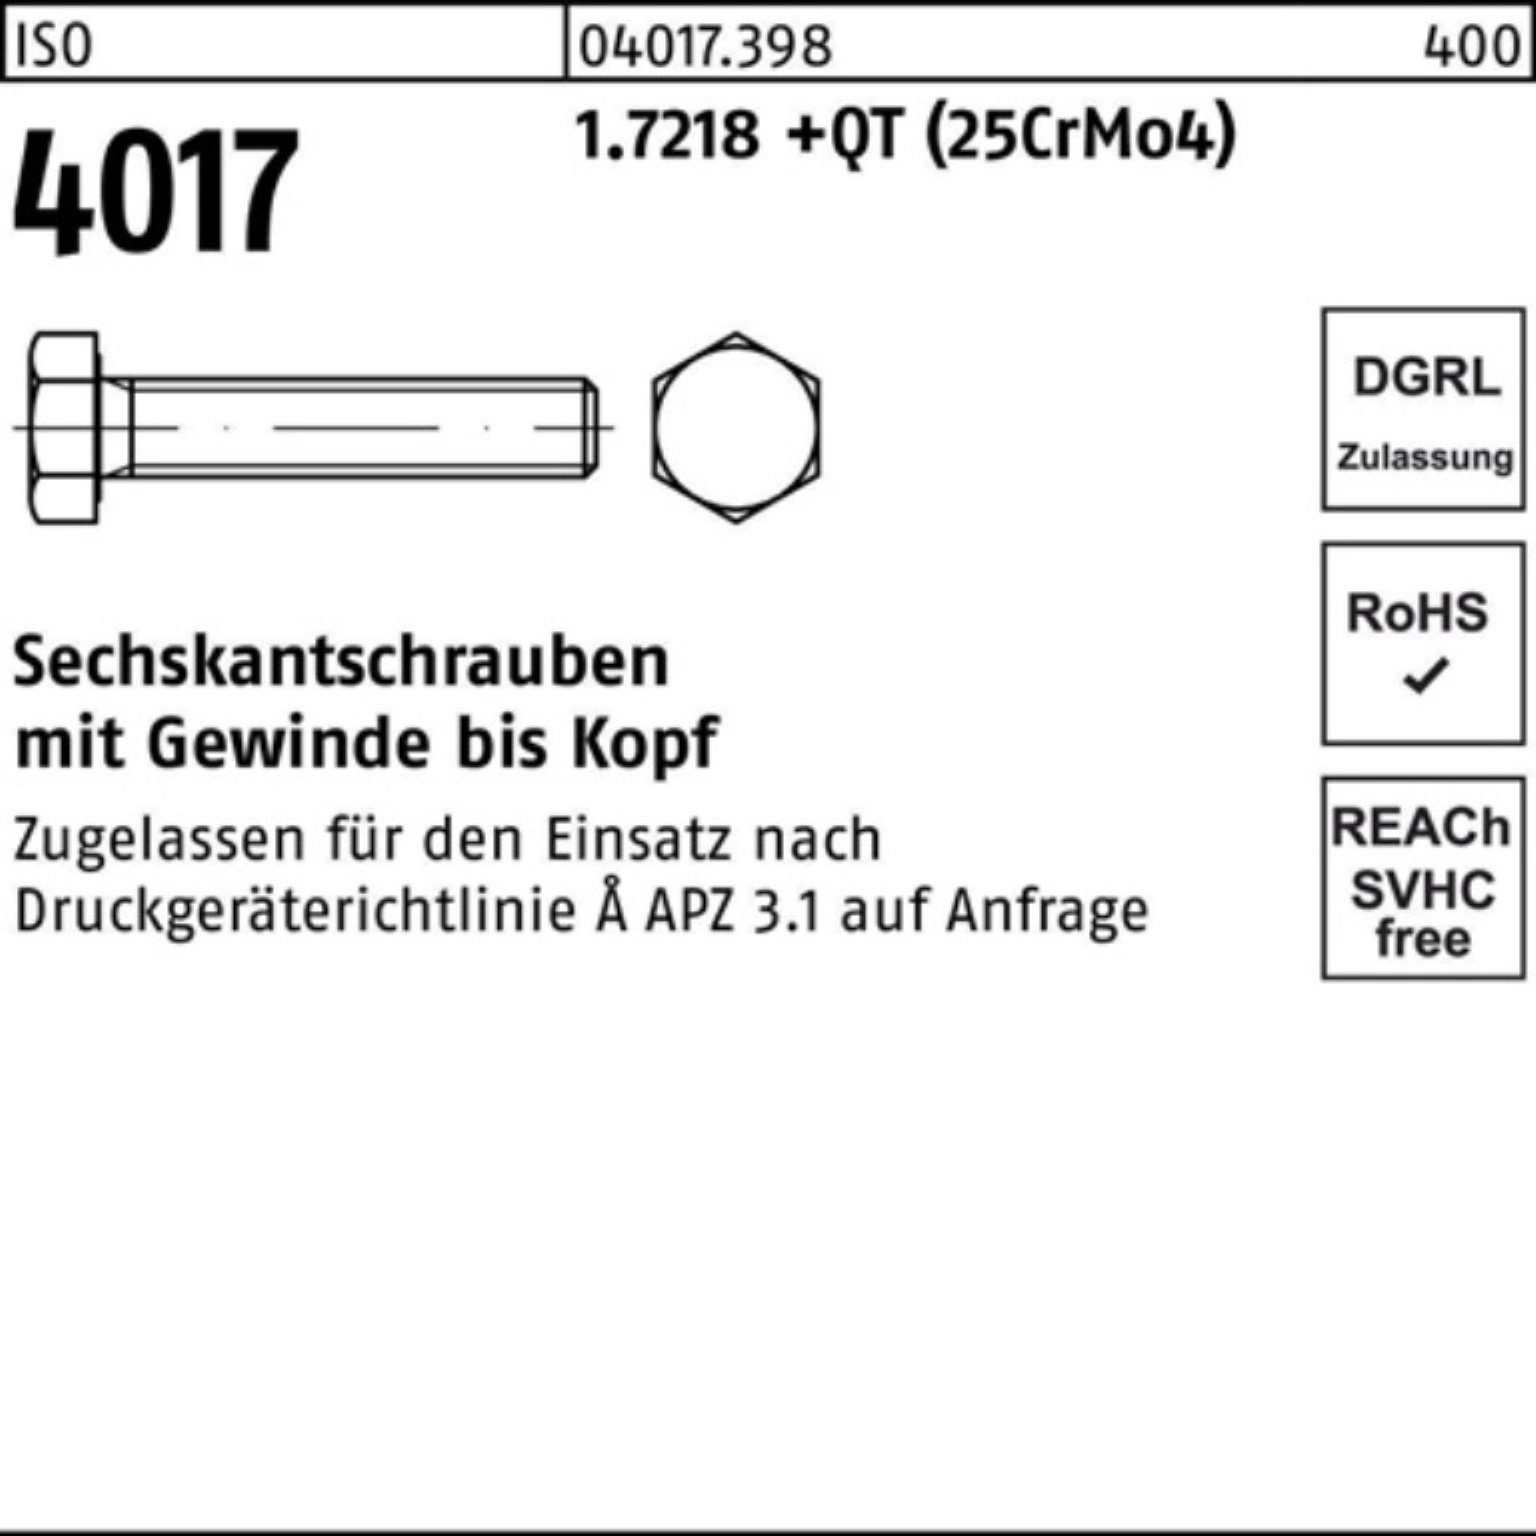 Bufab Sechskantschraube 100er 1.7218 4017 ISO +QT (25CrMo4) Pack M24x VG 100 Sechskantschraube